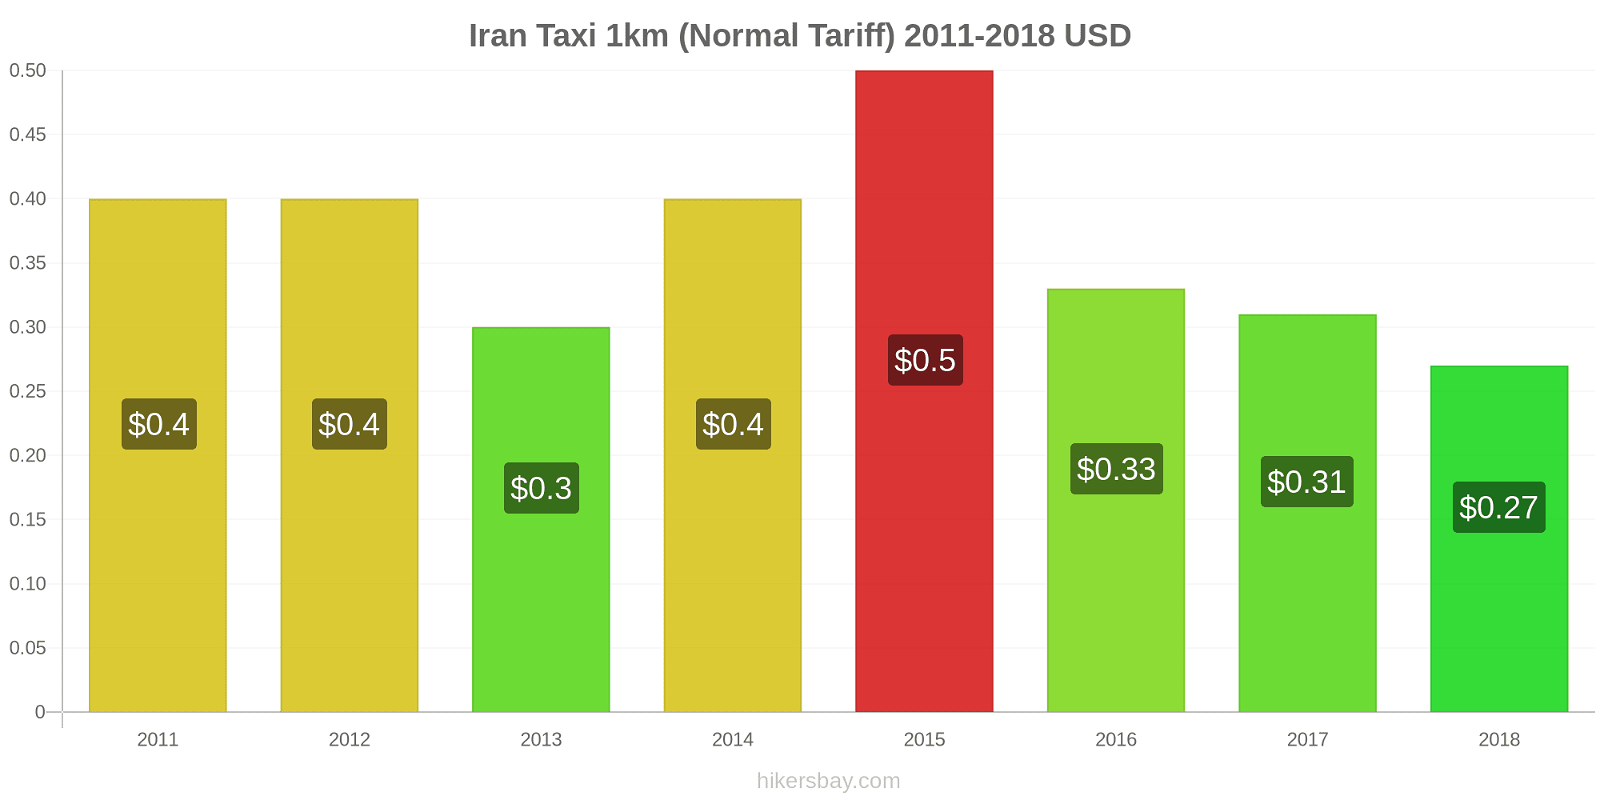 Iran price changes Taxi 1km (Normal Tariff) hikersbay.com